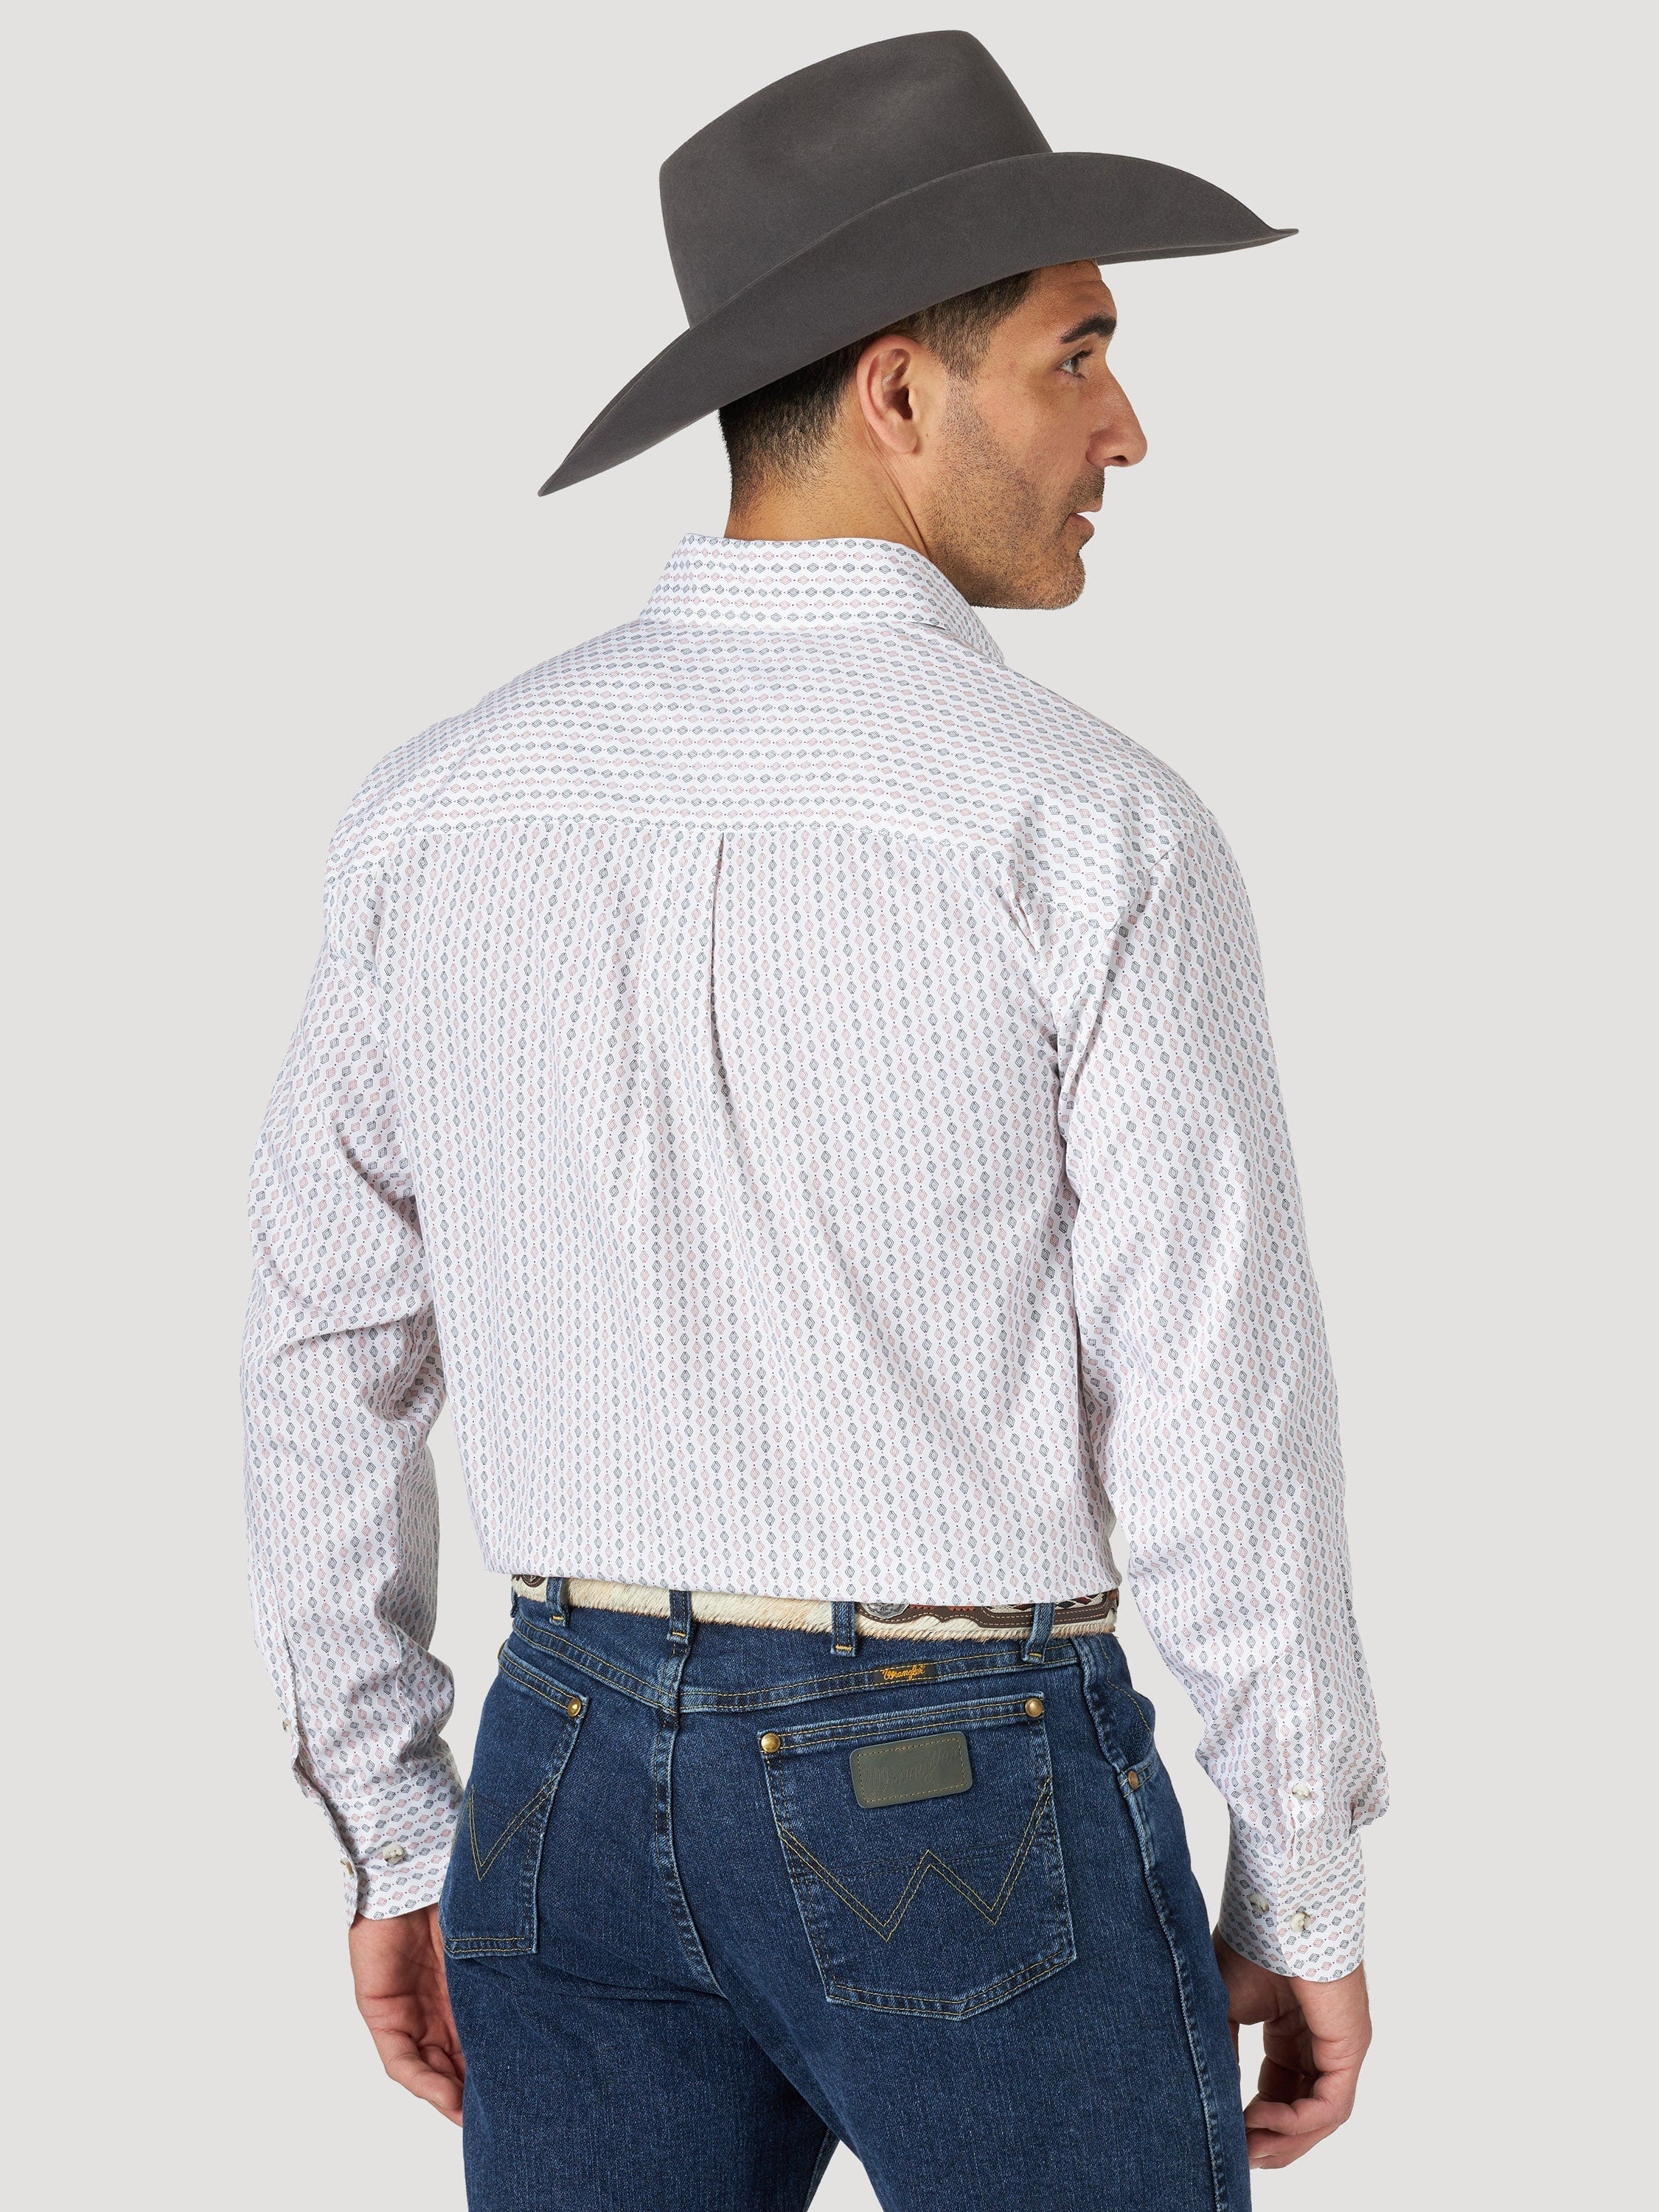 Wrangler Men's George Strait White One Pocket Long Sleeve Button Down -  Russell's Western Wear, Inc.